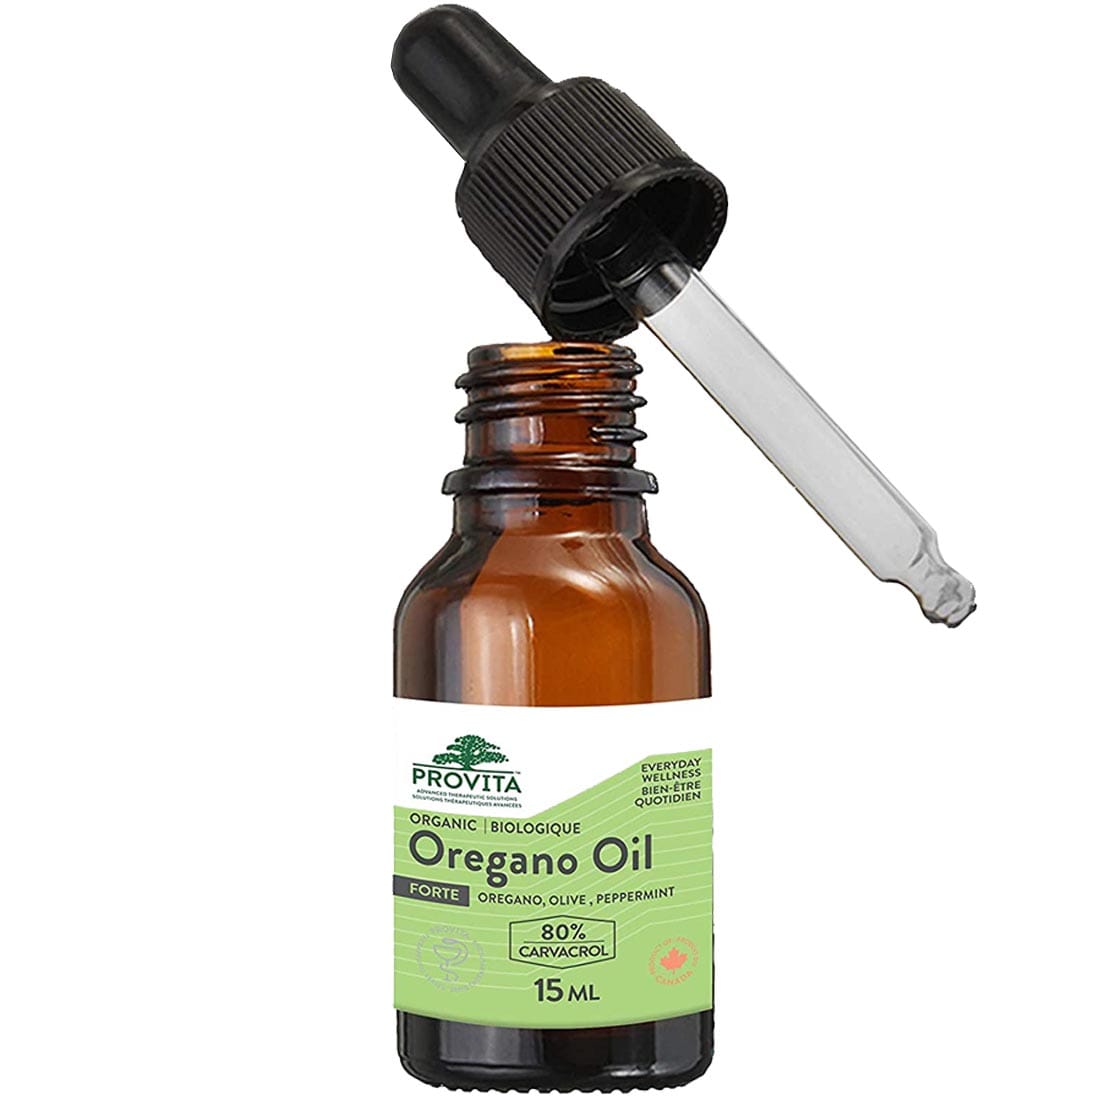 Provita Organic Oregano Oil, 15ml